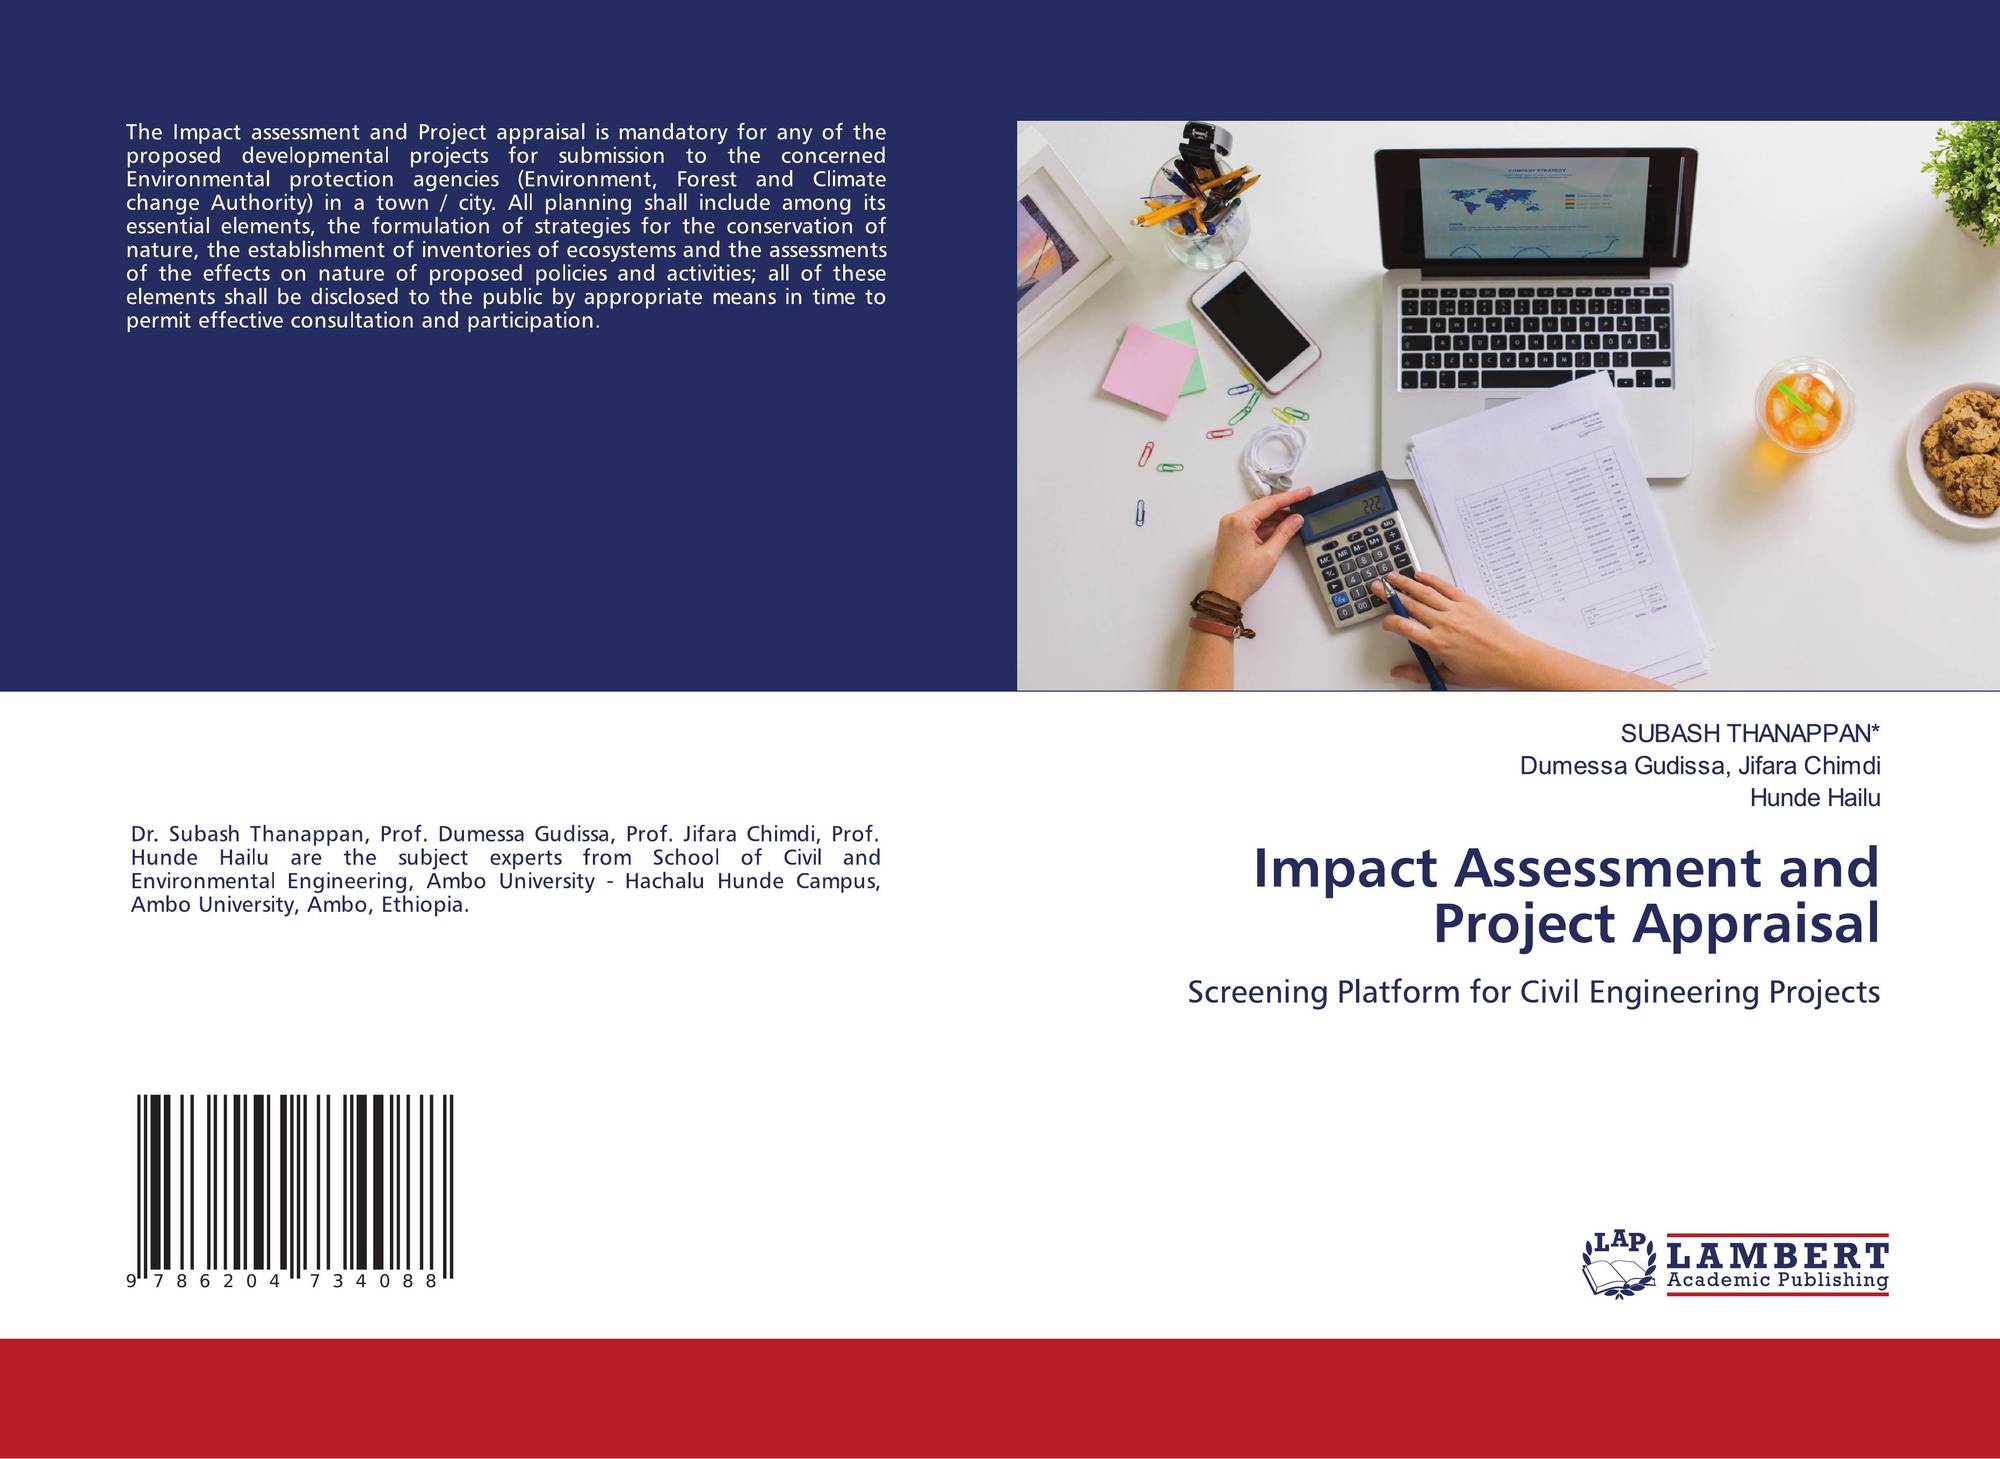 Impact assessment